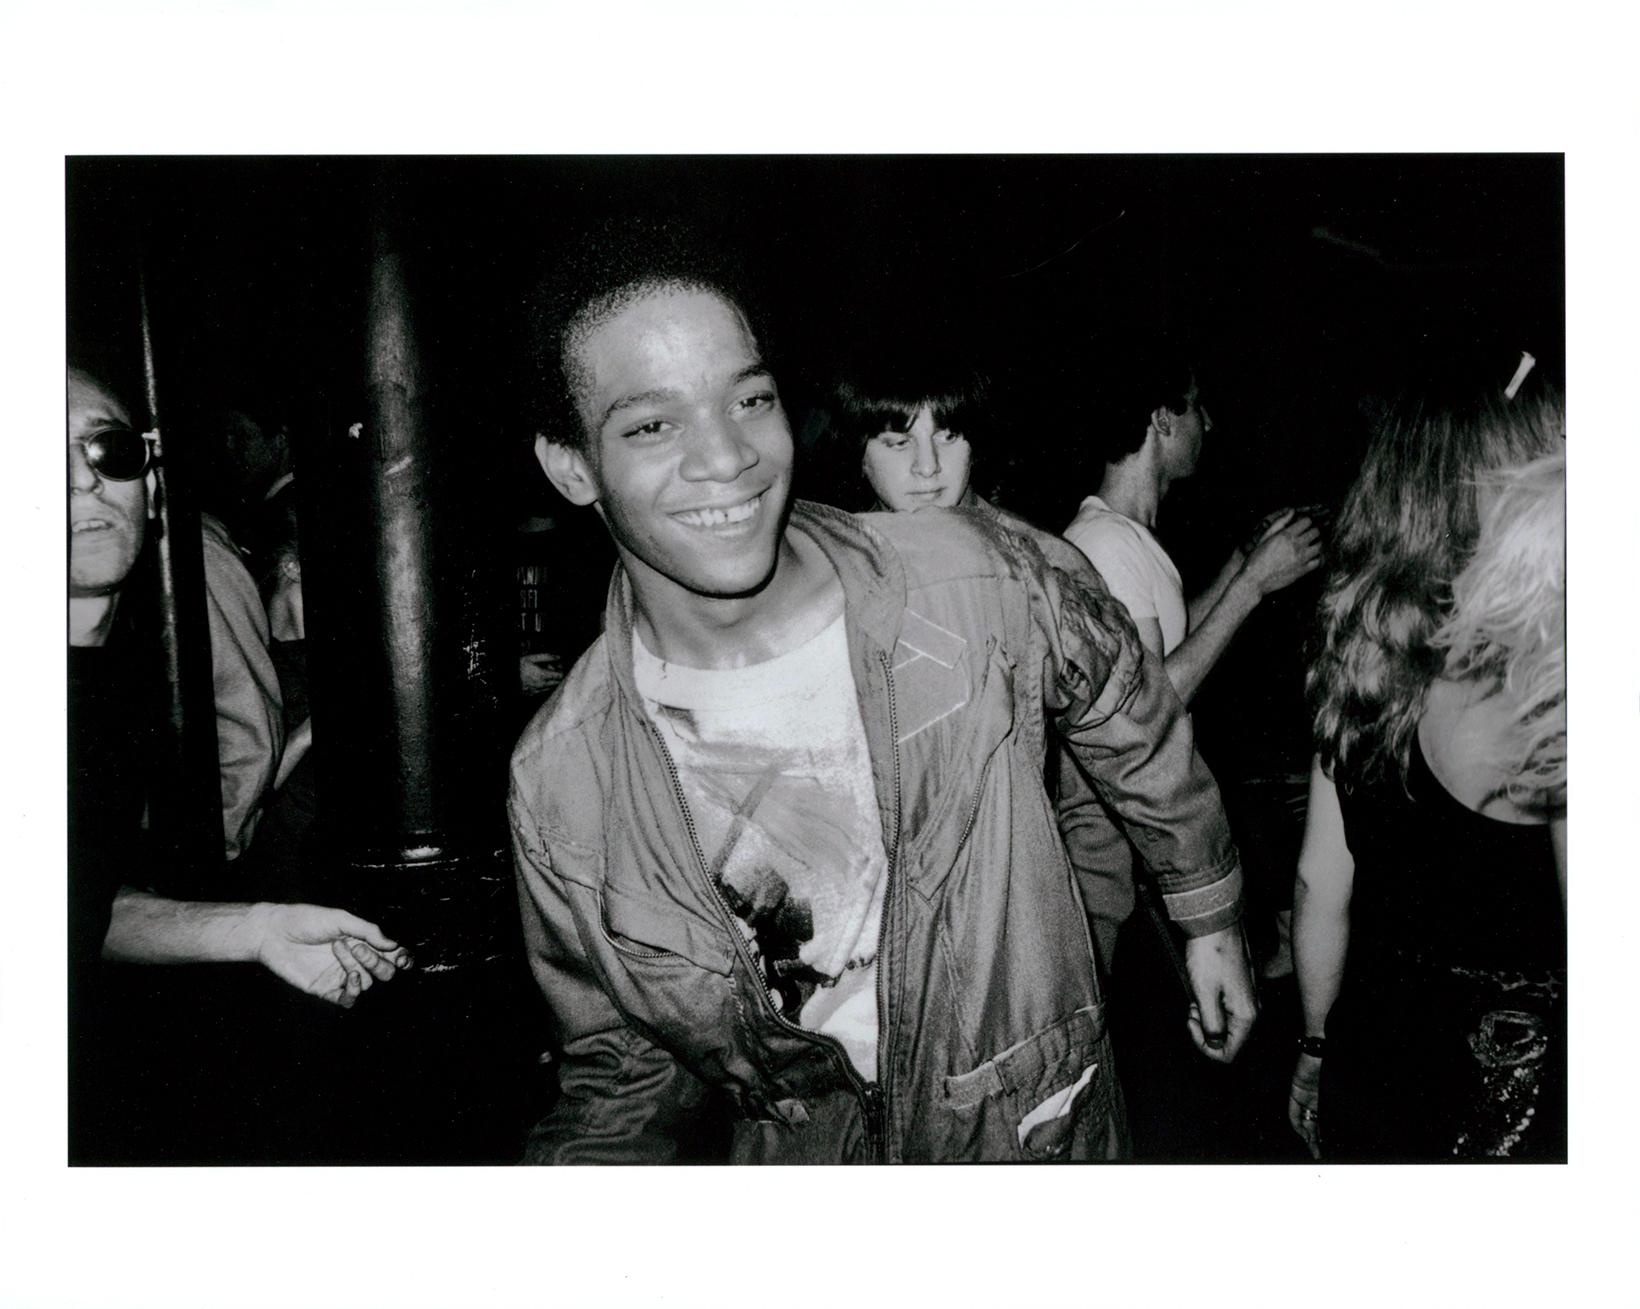 BASQUIAT Dancing at The Mudd Club, 1979 (photographie de Basquiat Boom For Real) - Photograph de Nicholas Taylor